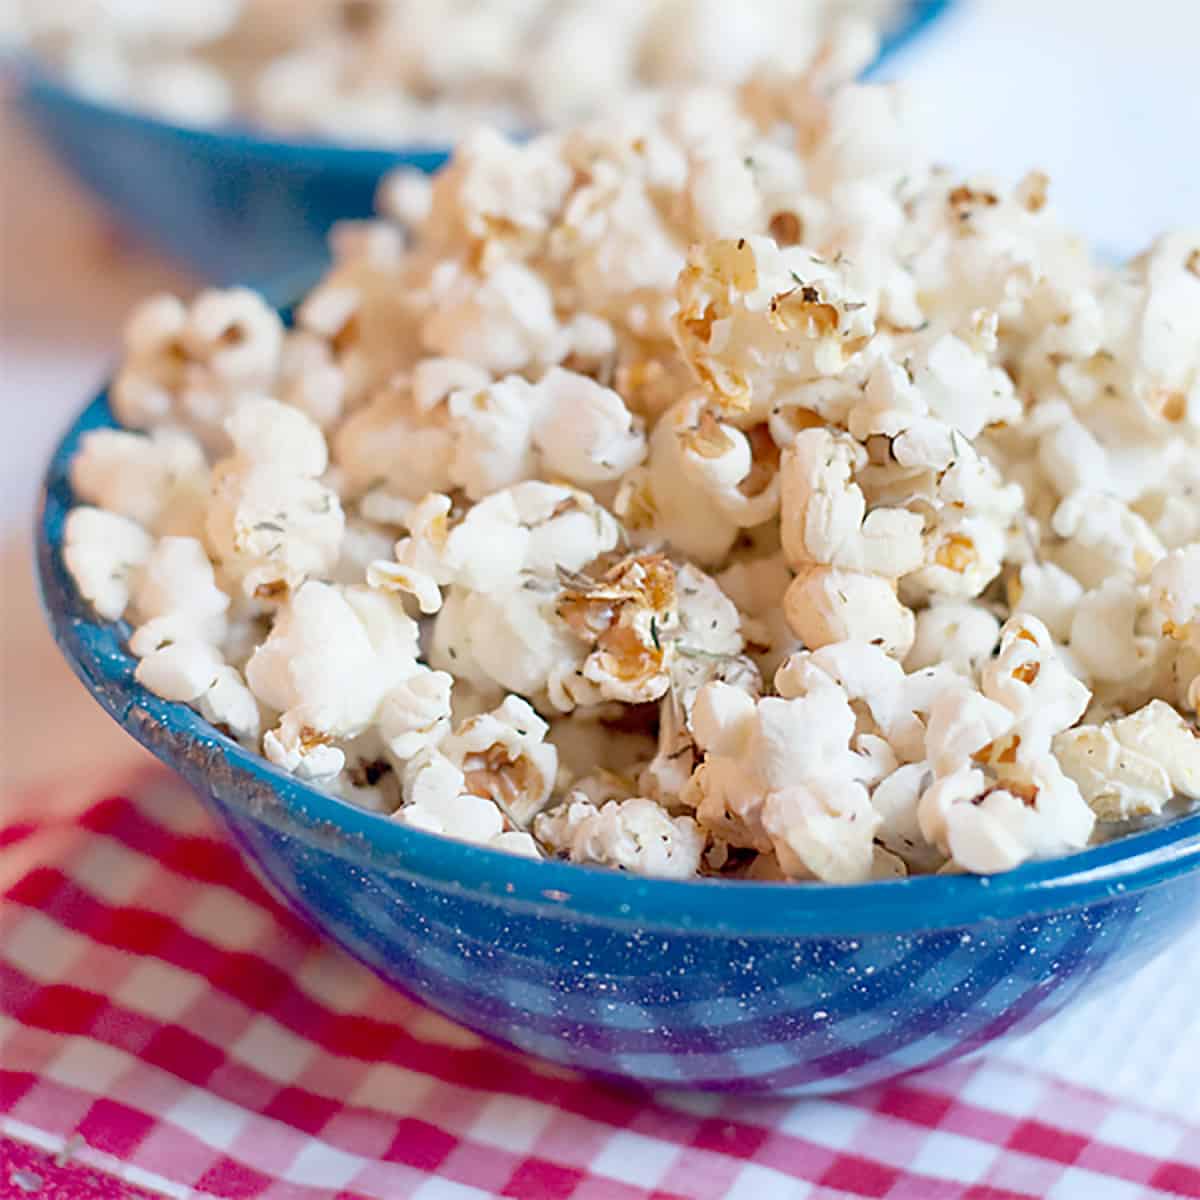 Popcorn in a blue bowl.